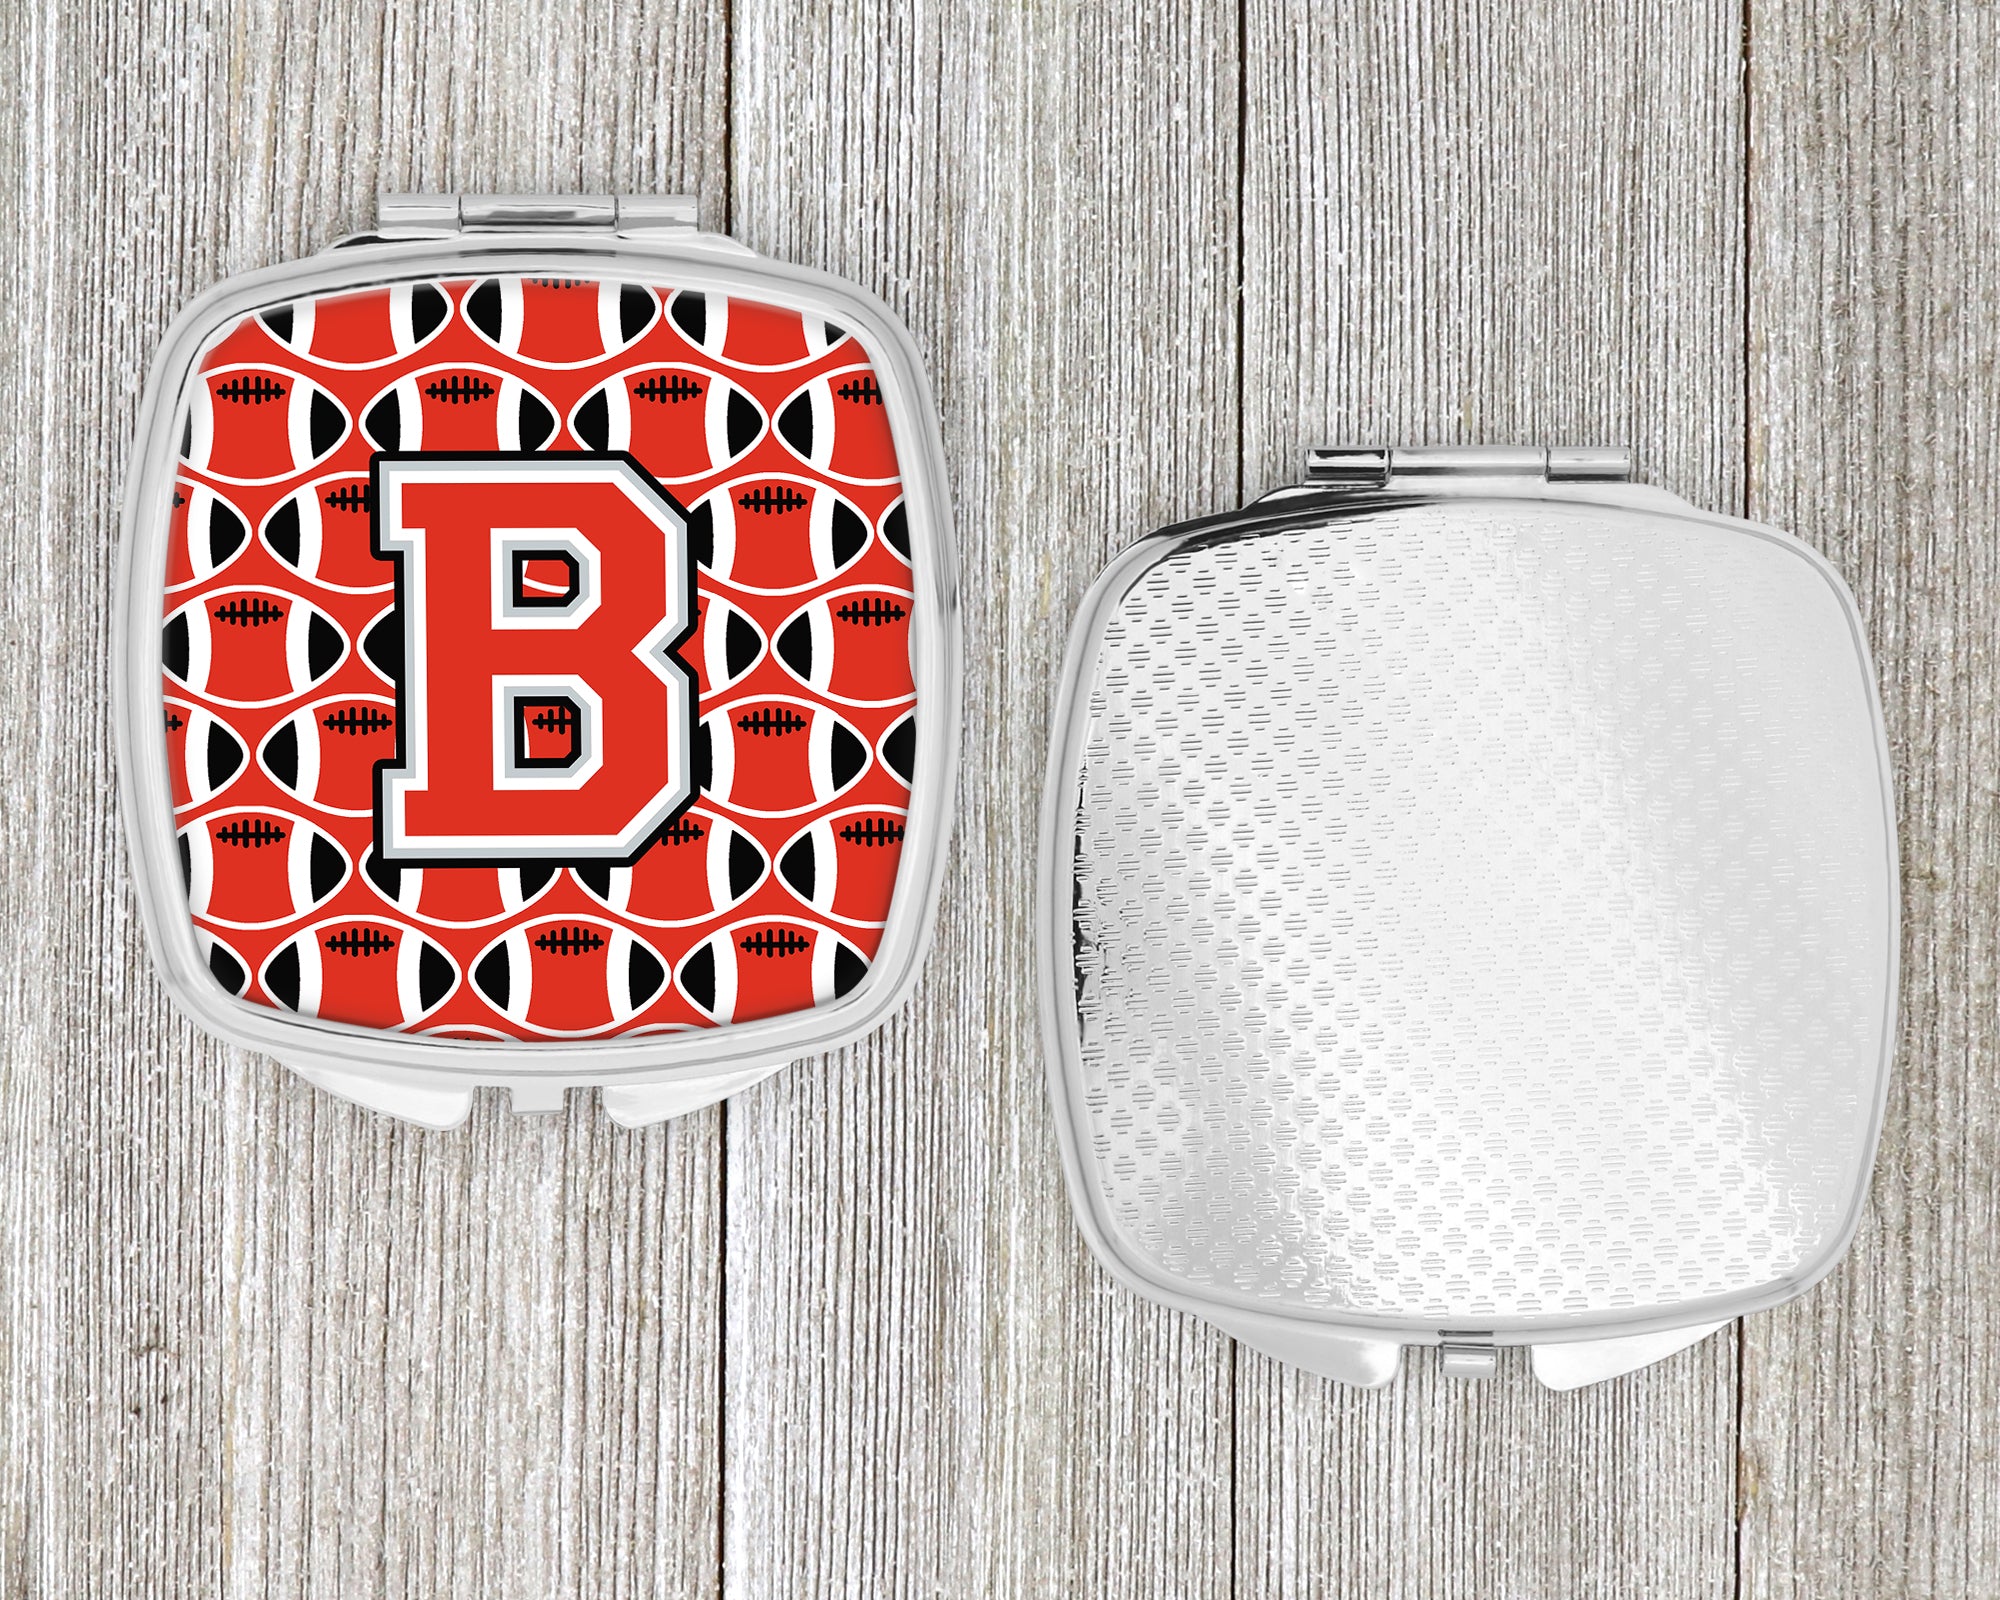 Miroir compact lettre B football écarlate et gris CJ1067-BSCM